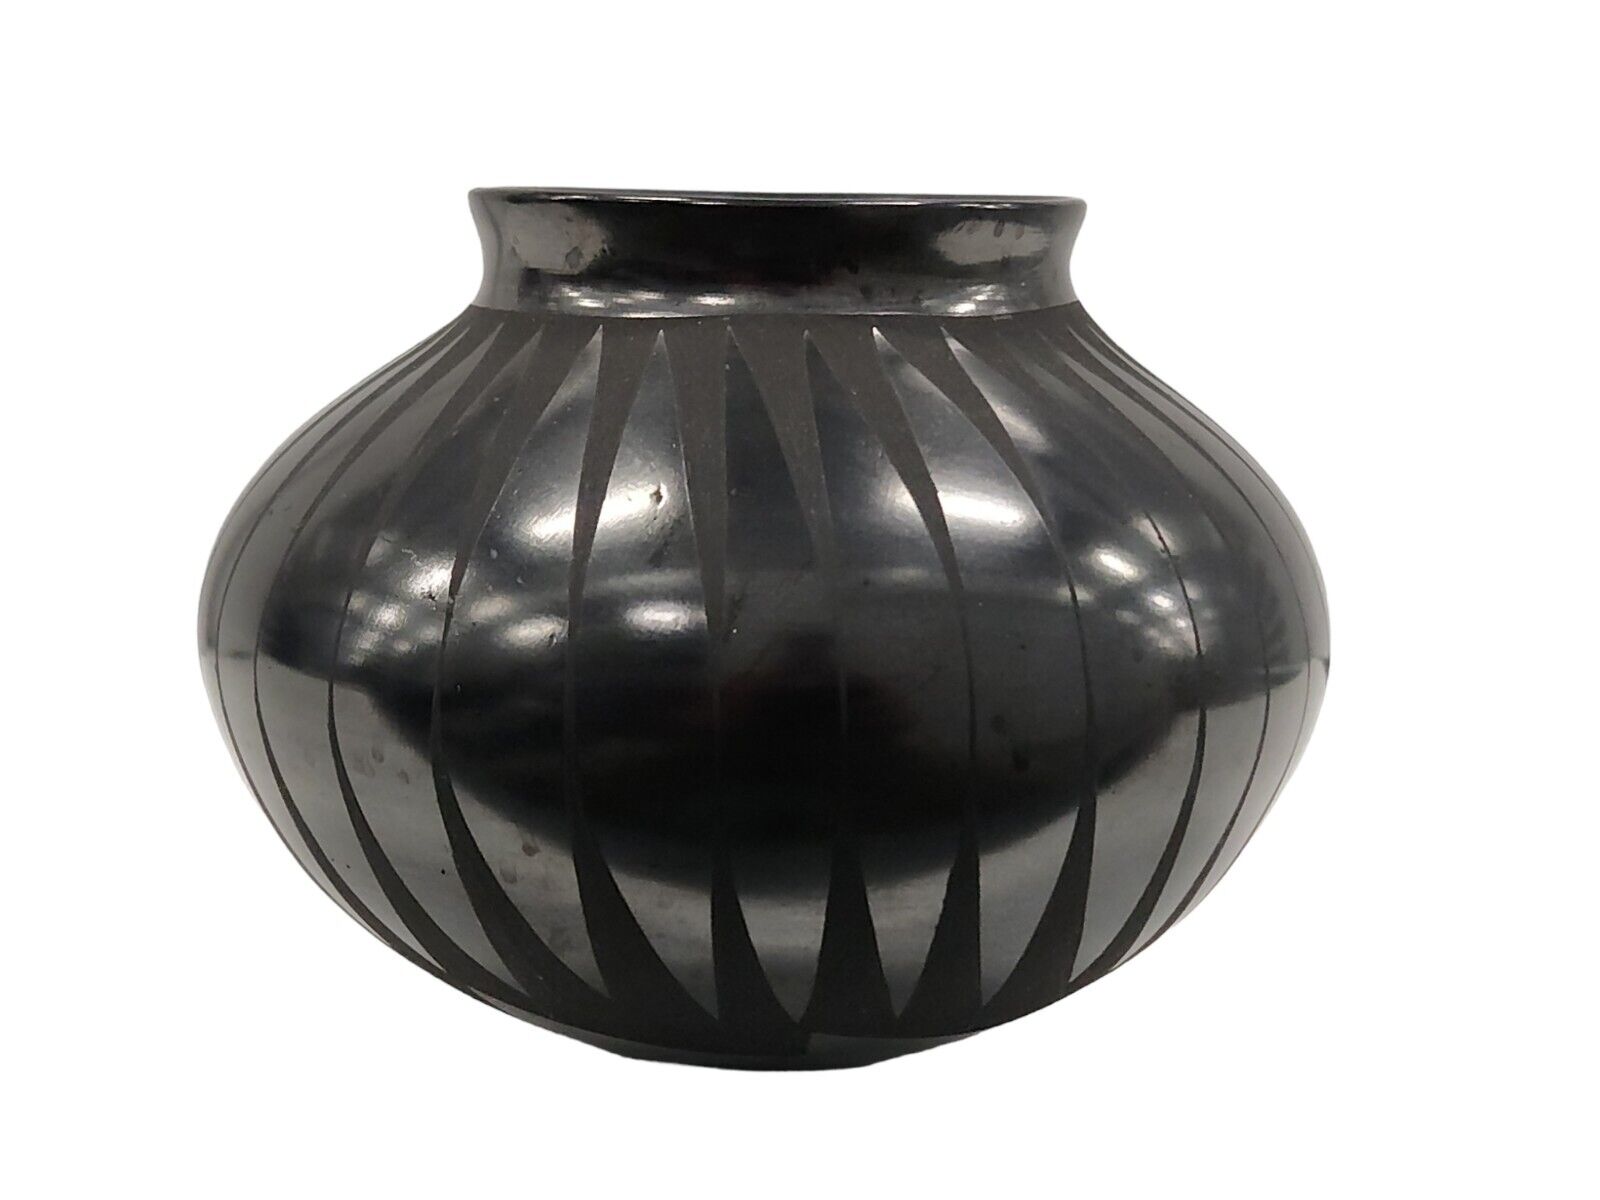 Vintage Mata Ortiz Pottery Pot Olla by ARMINDA SILVEIRA - Black on Black